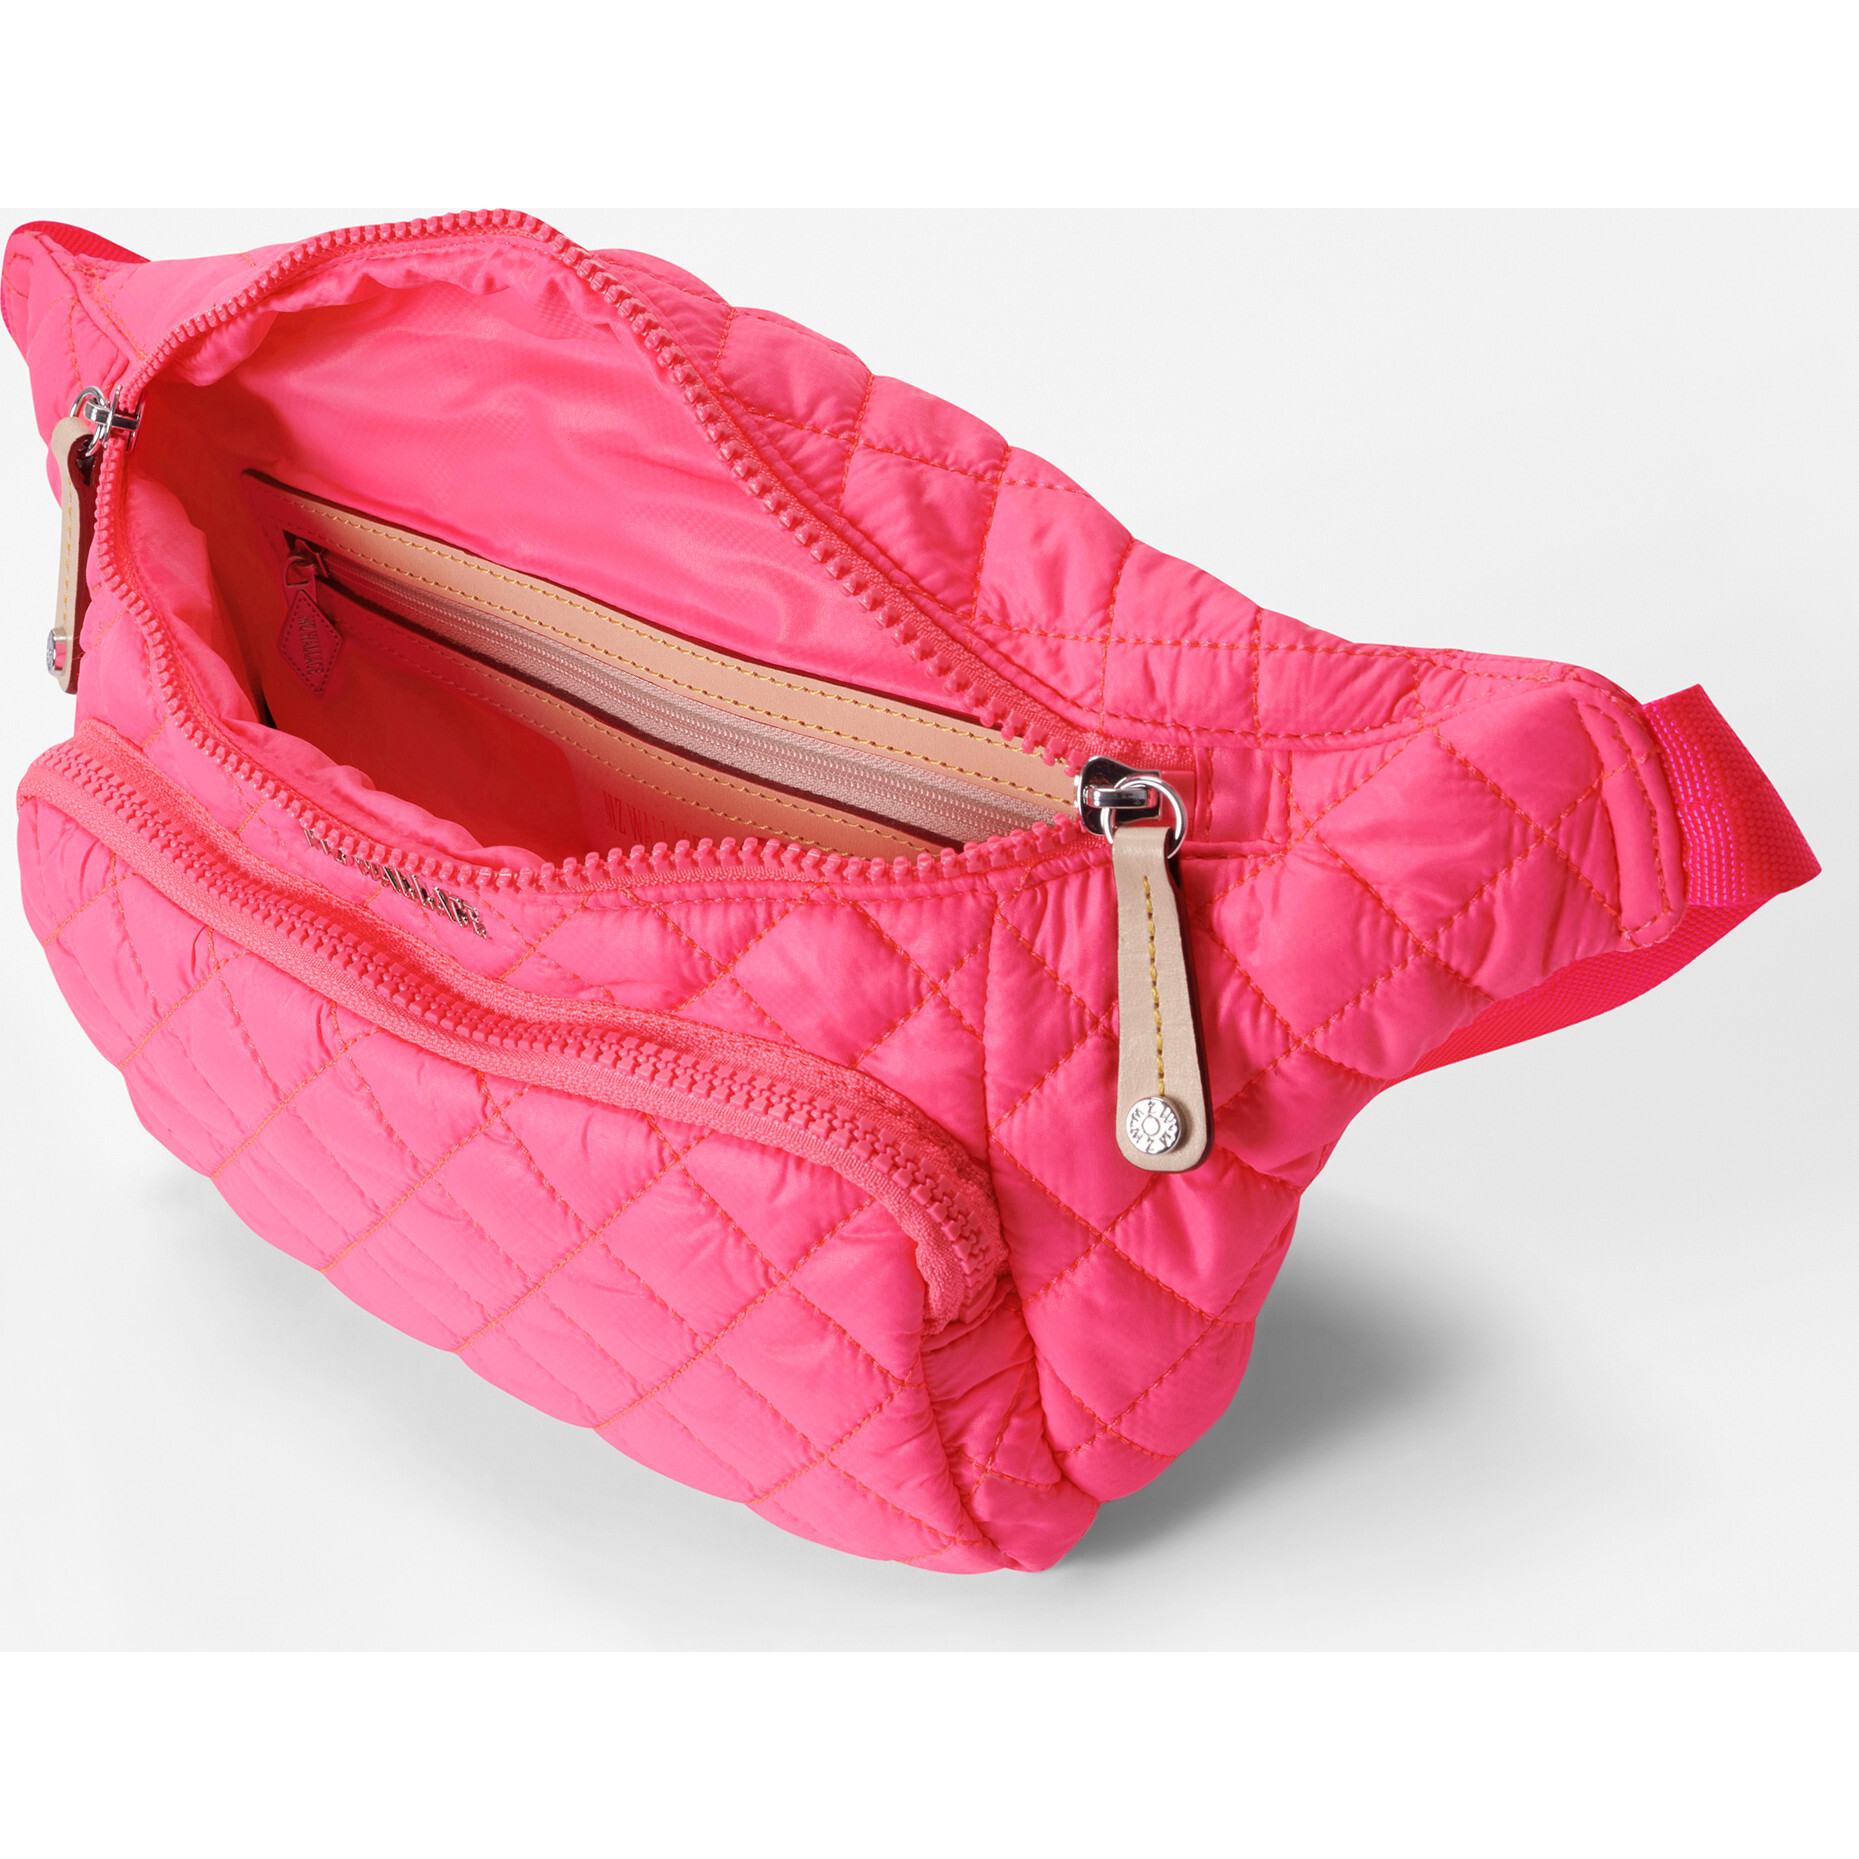 Metro Sling Bag, Neon Pink - MZ Wallace Bags & Luggage